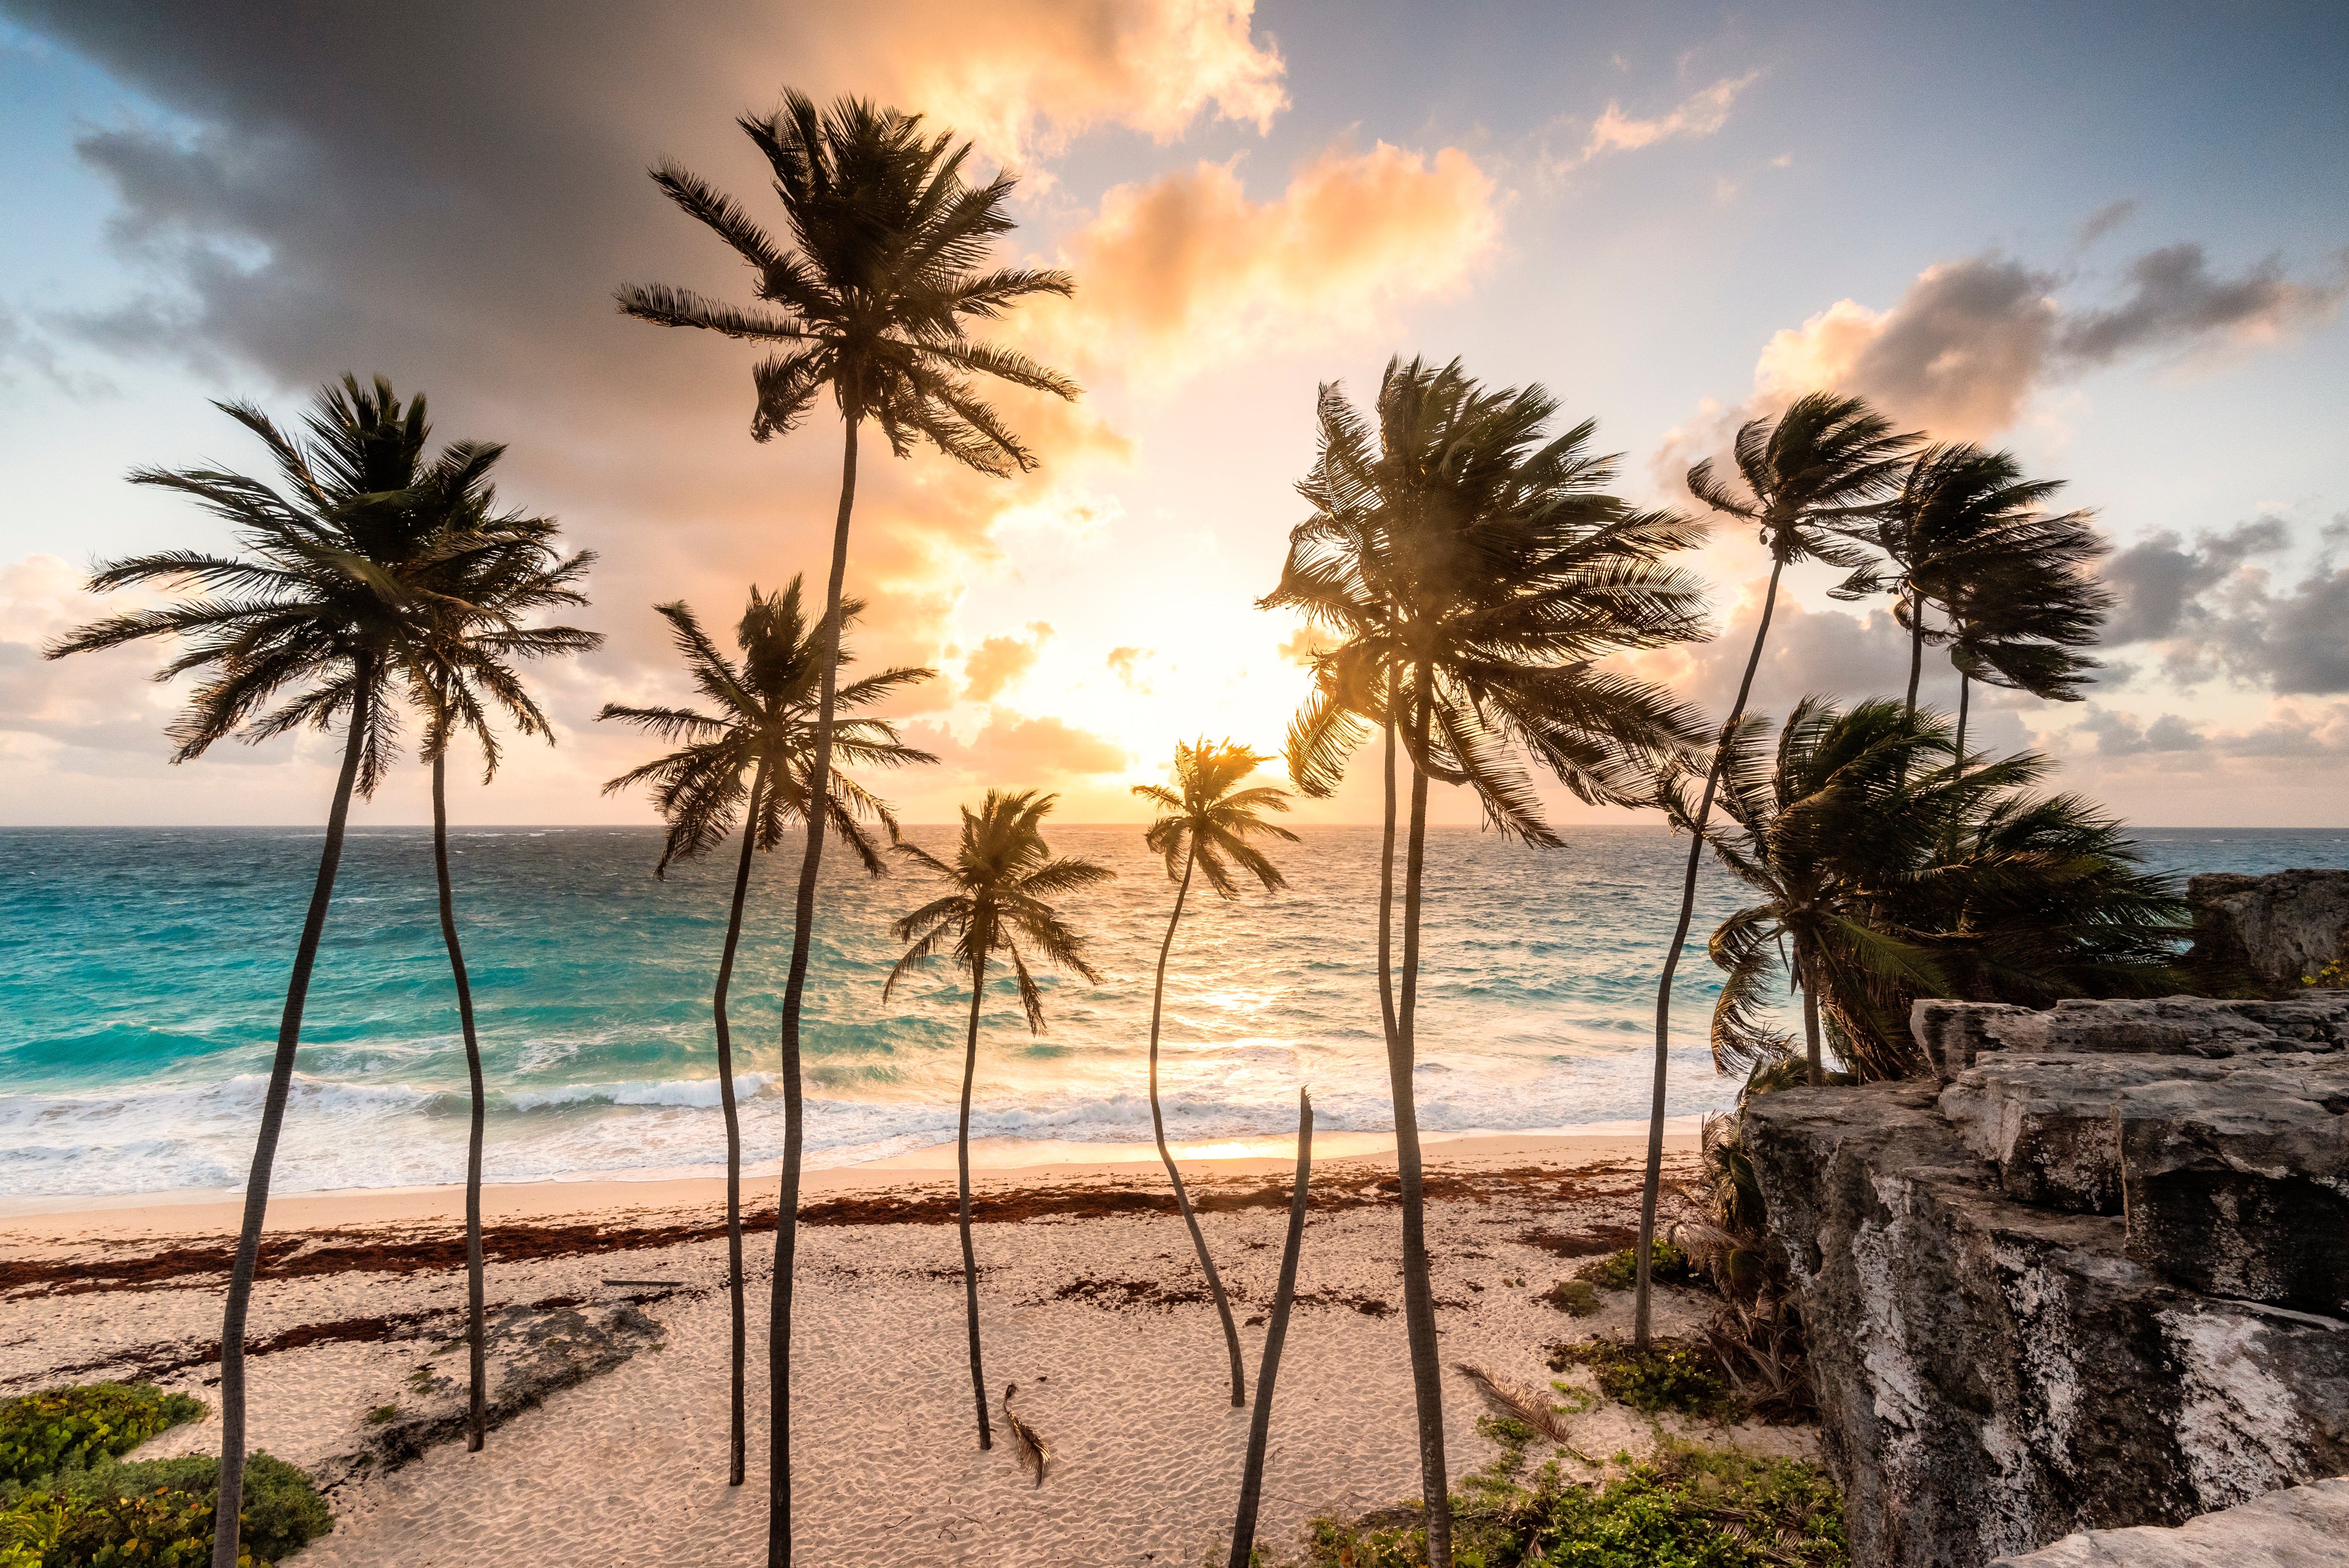 Barbados balances idyllic beaches and vibrant nightlife